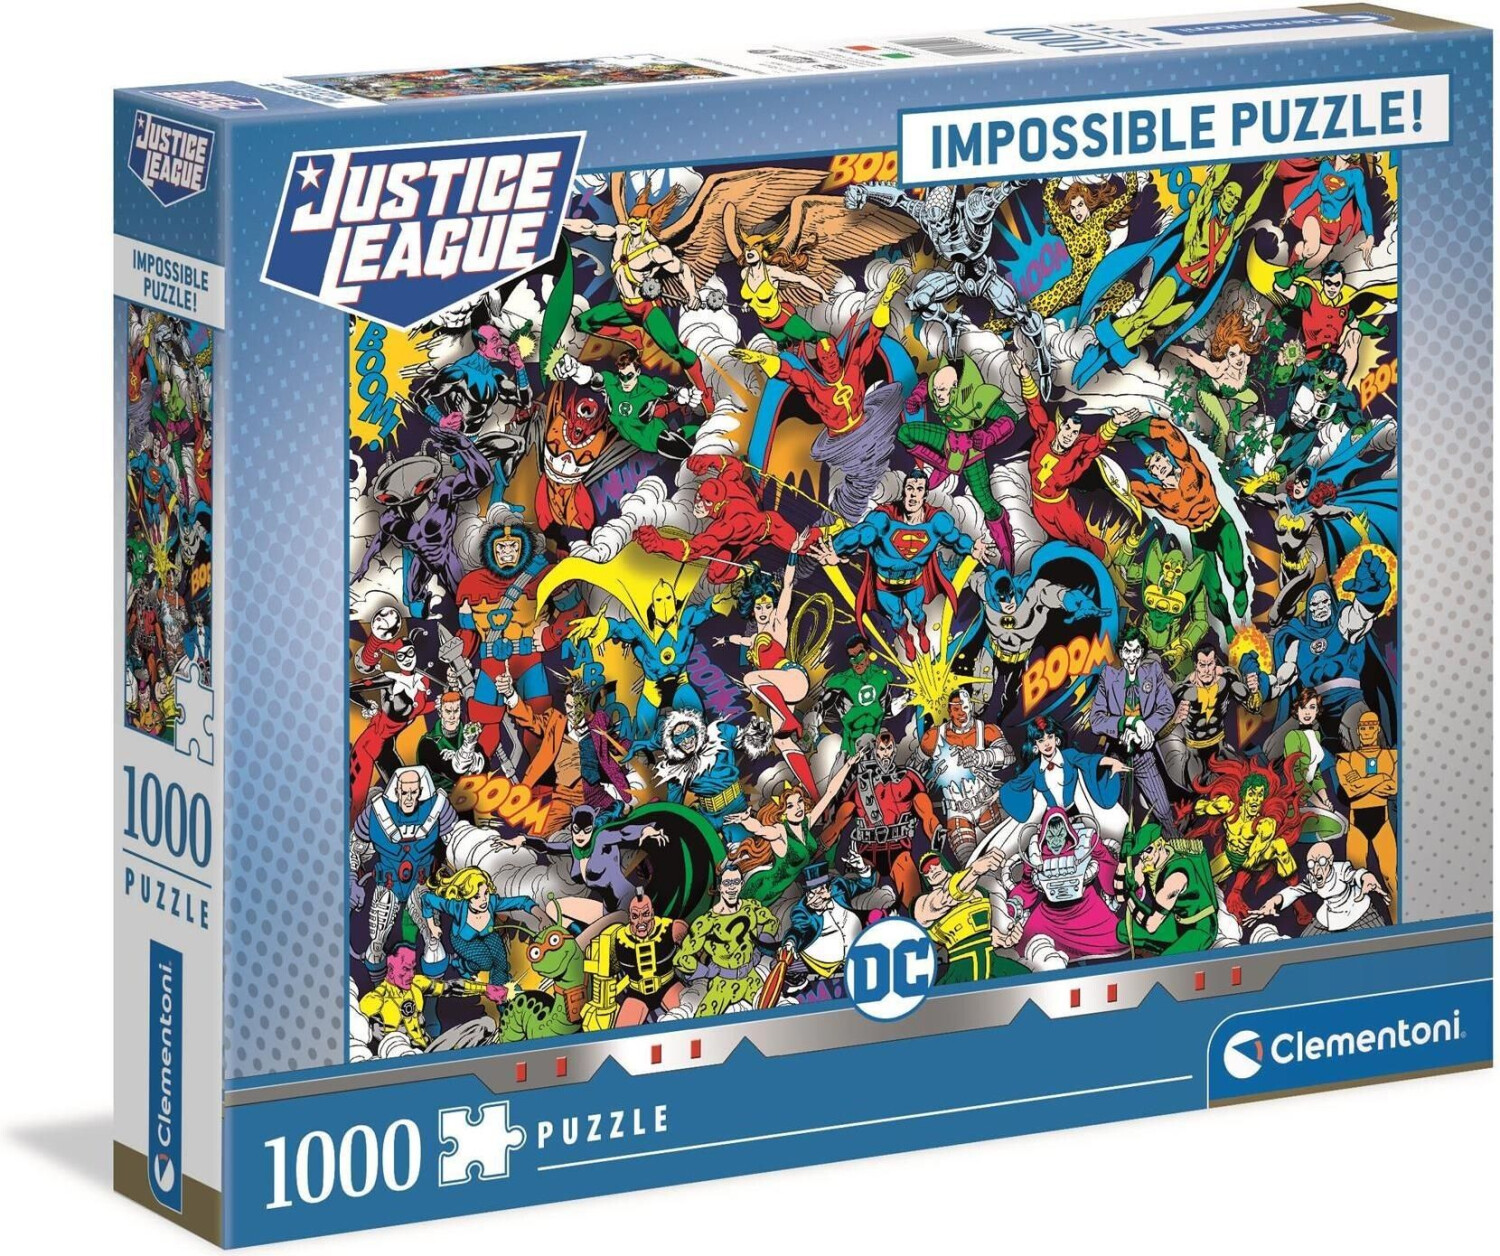 Photos - Jigsaw Puzzle / Mosaic Clementoni Impossible Puzzle - Justice Leage  (1000 pieces)